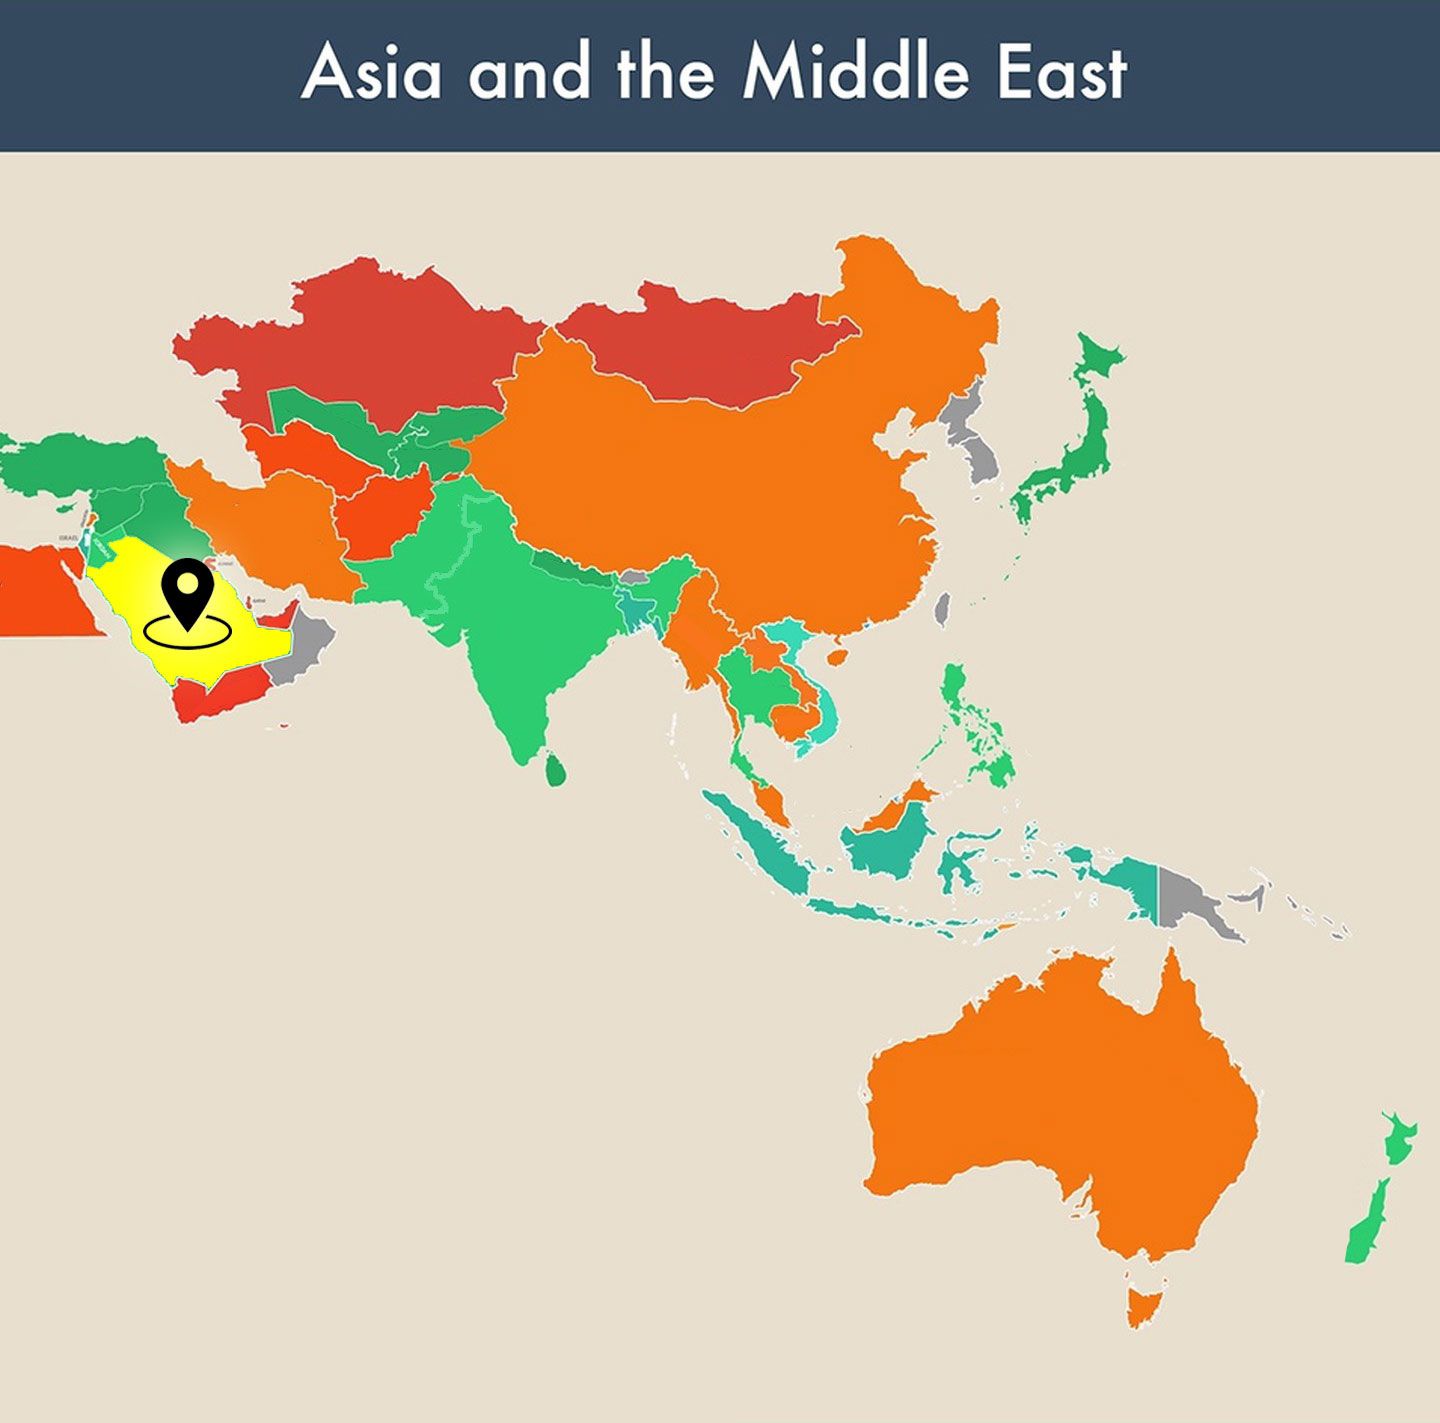 countries of the world empty map - saudi arabia image